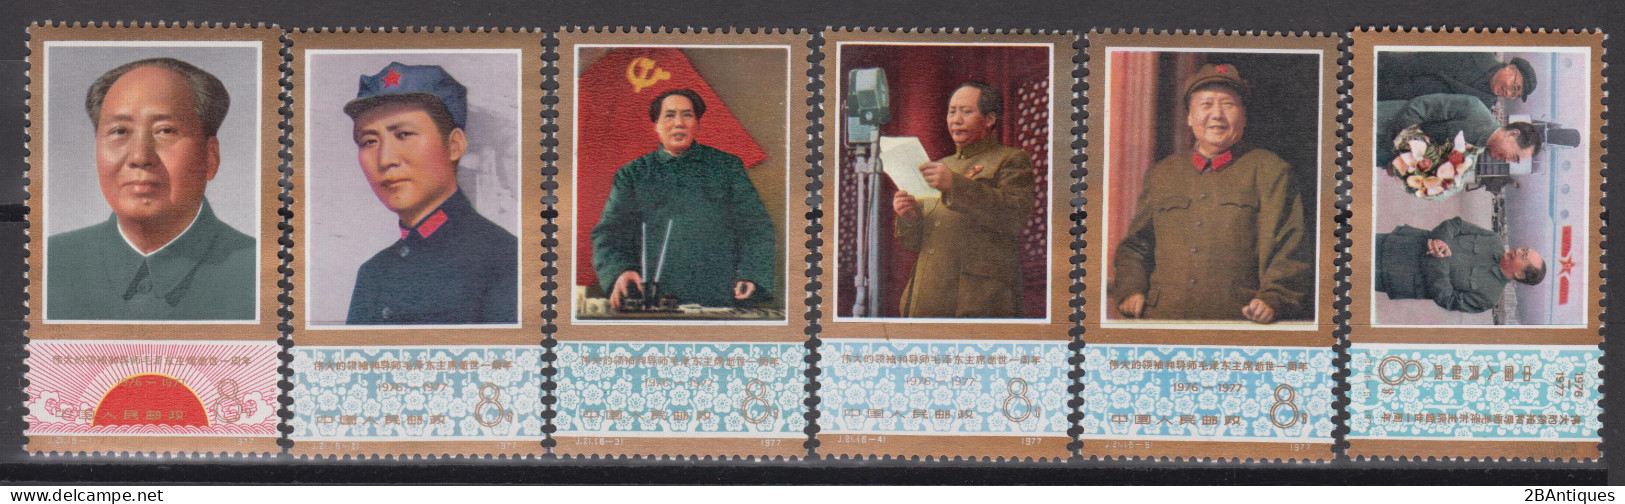 PR CHINA 1977 - The 1st Anniversary Of The Death Of Mao Tse-tung  MNH** OG - Nuevos